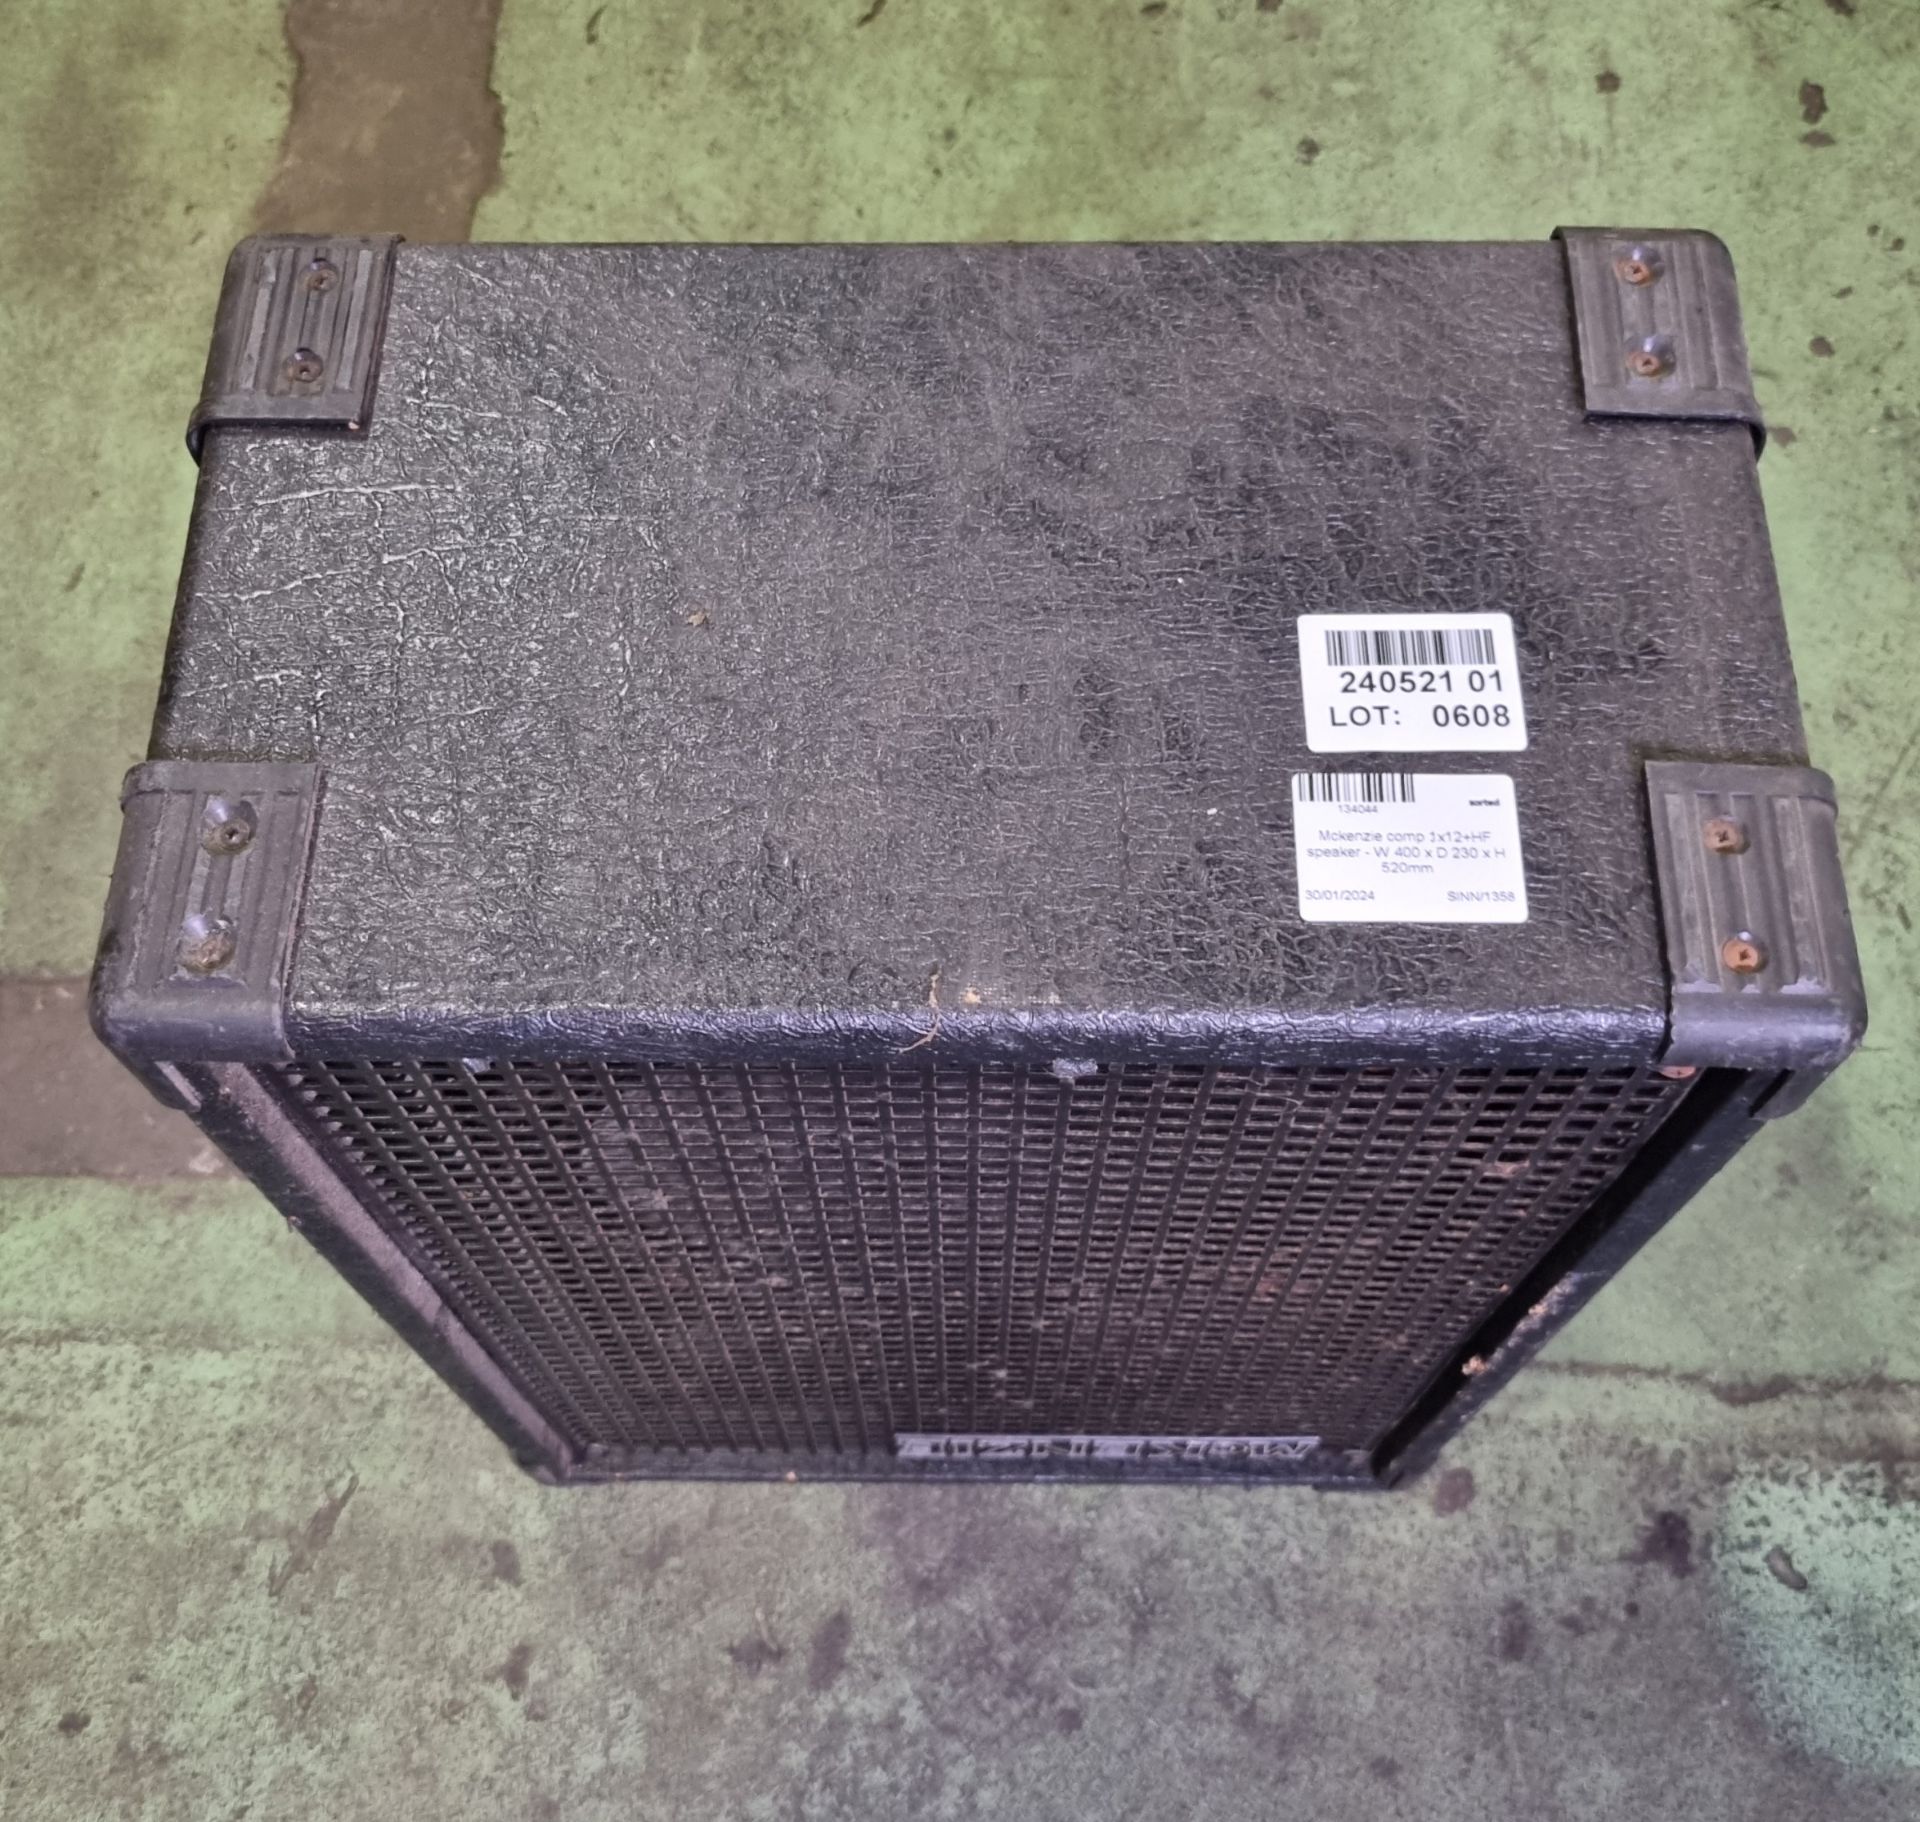 Mckenzie comp 1x12+HF speaker - W 400 x D 230 x H 520mm - Image 2 of 4